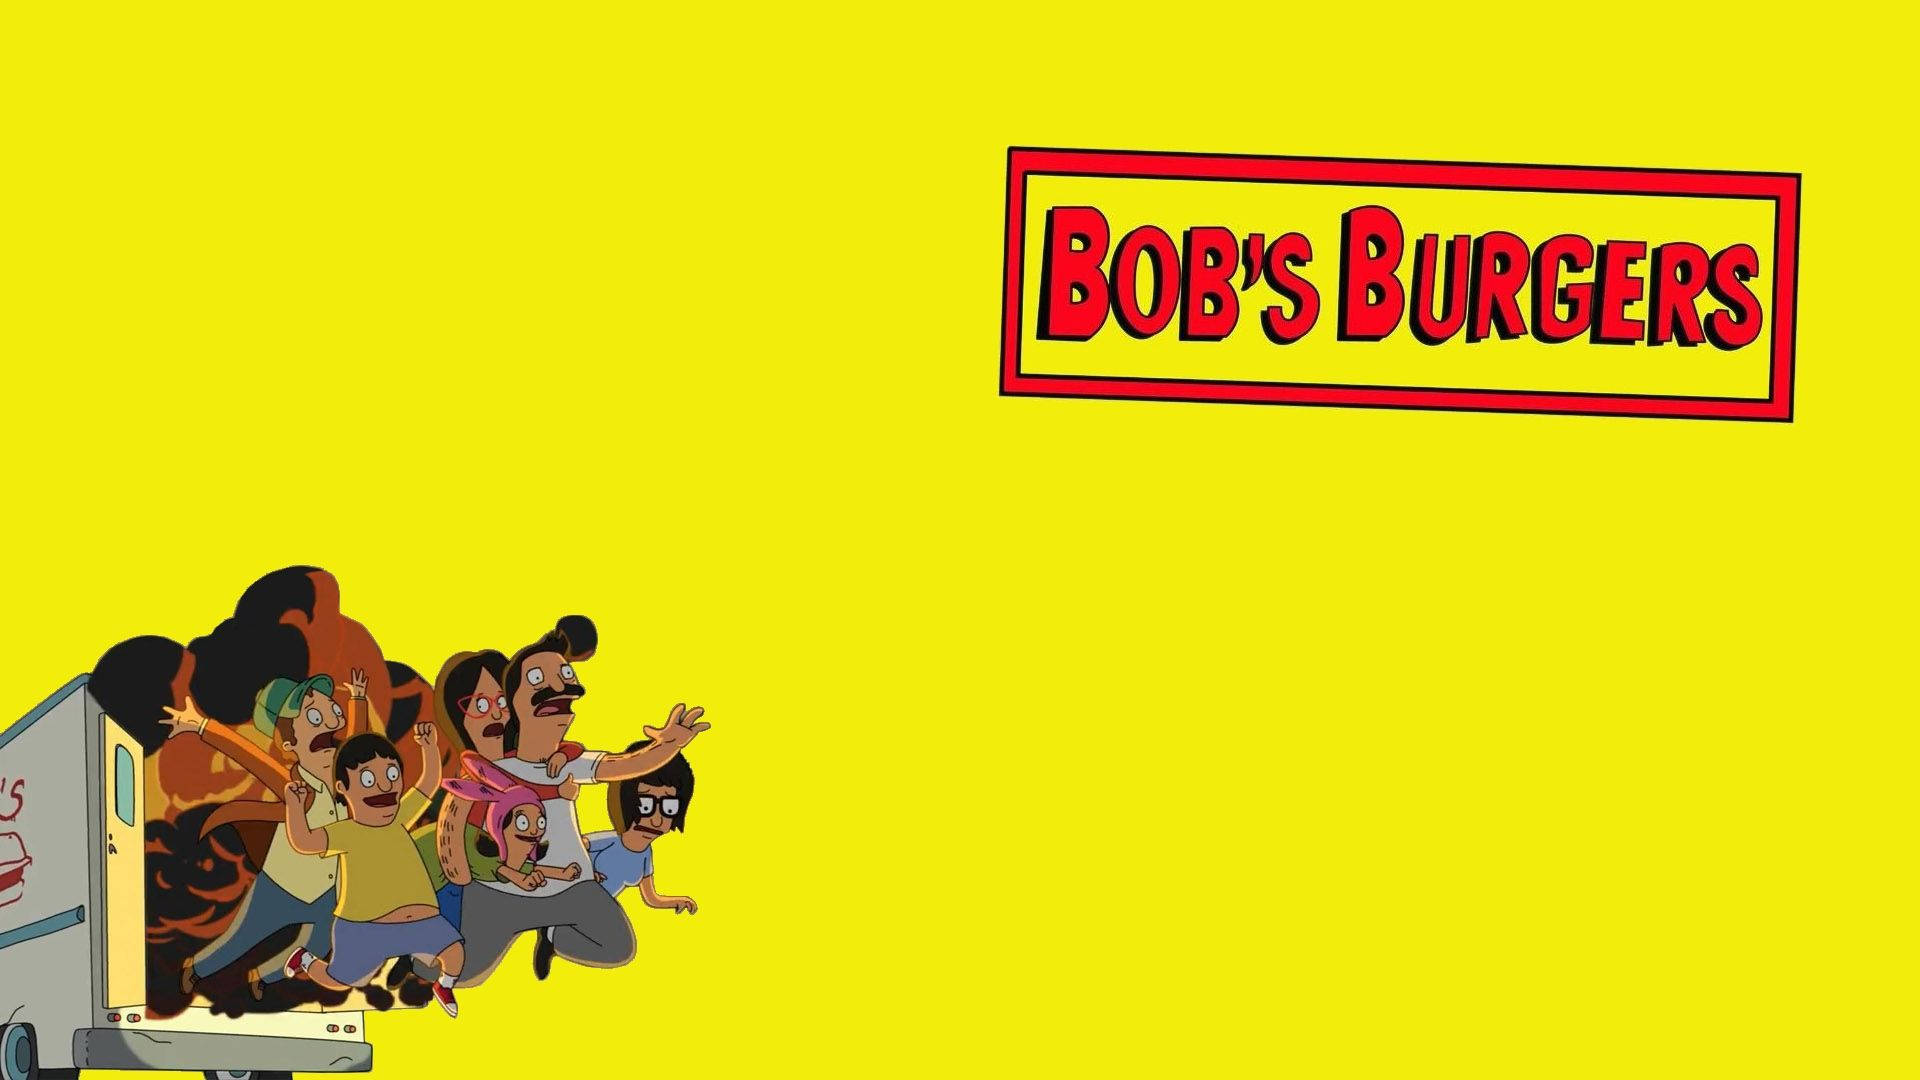 Bobs Burgers Food Truck On Fire Wallpaper